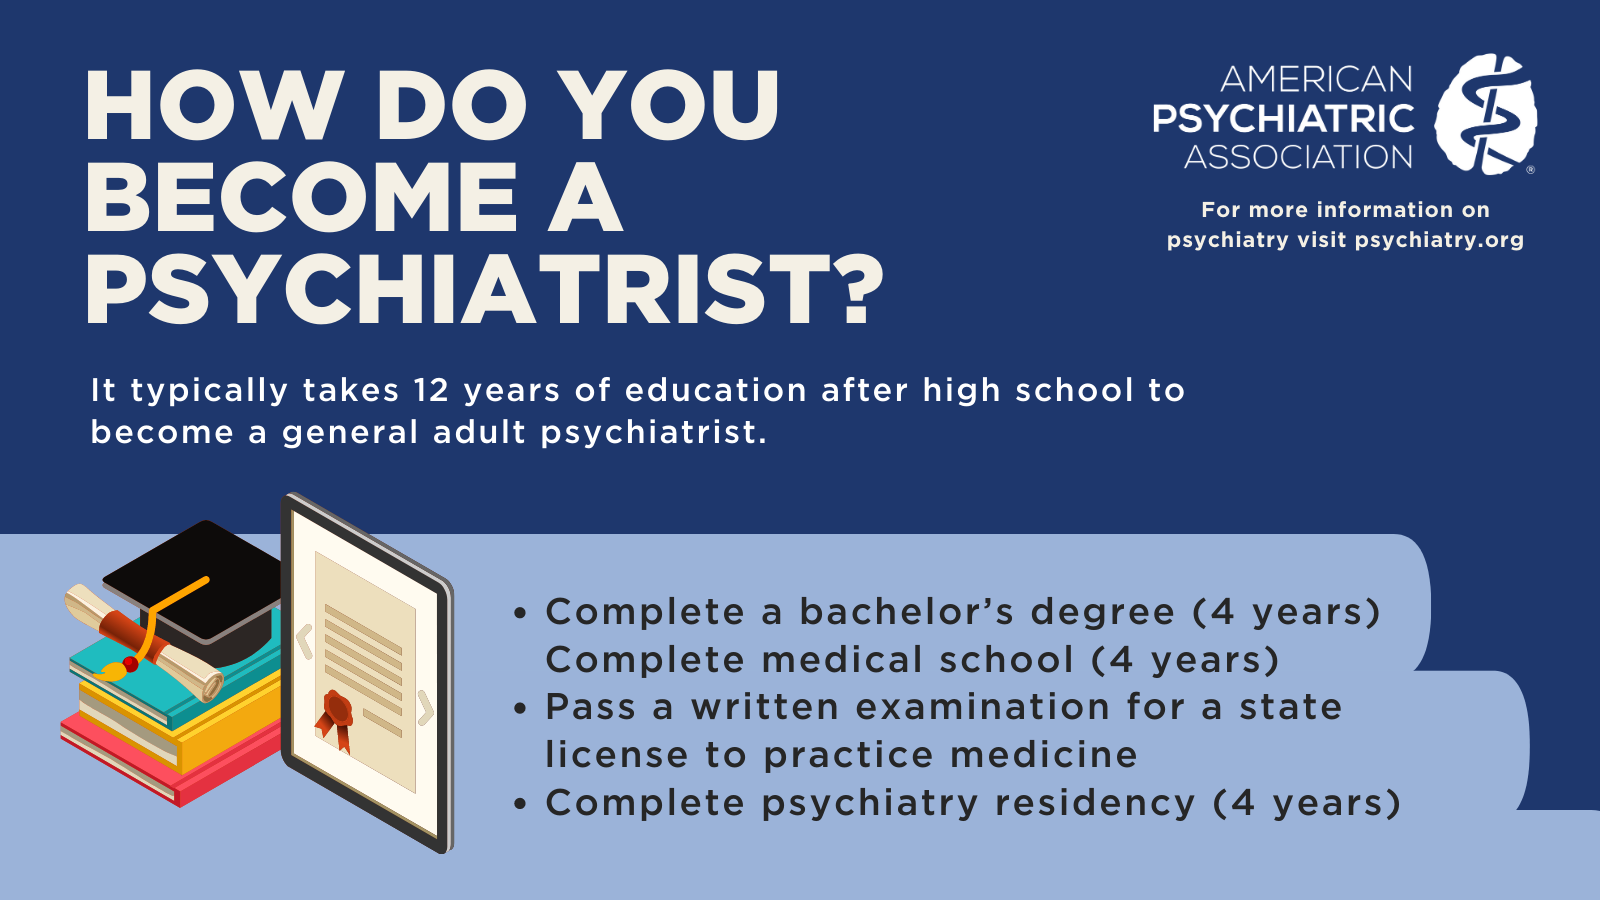 How do you become a psychiatrist?